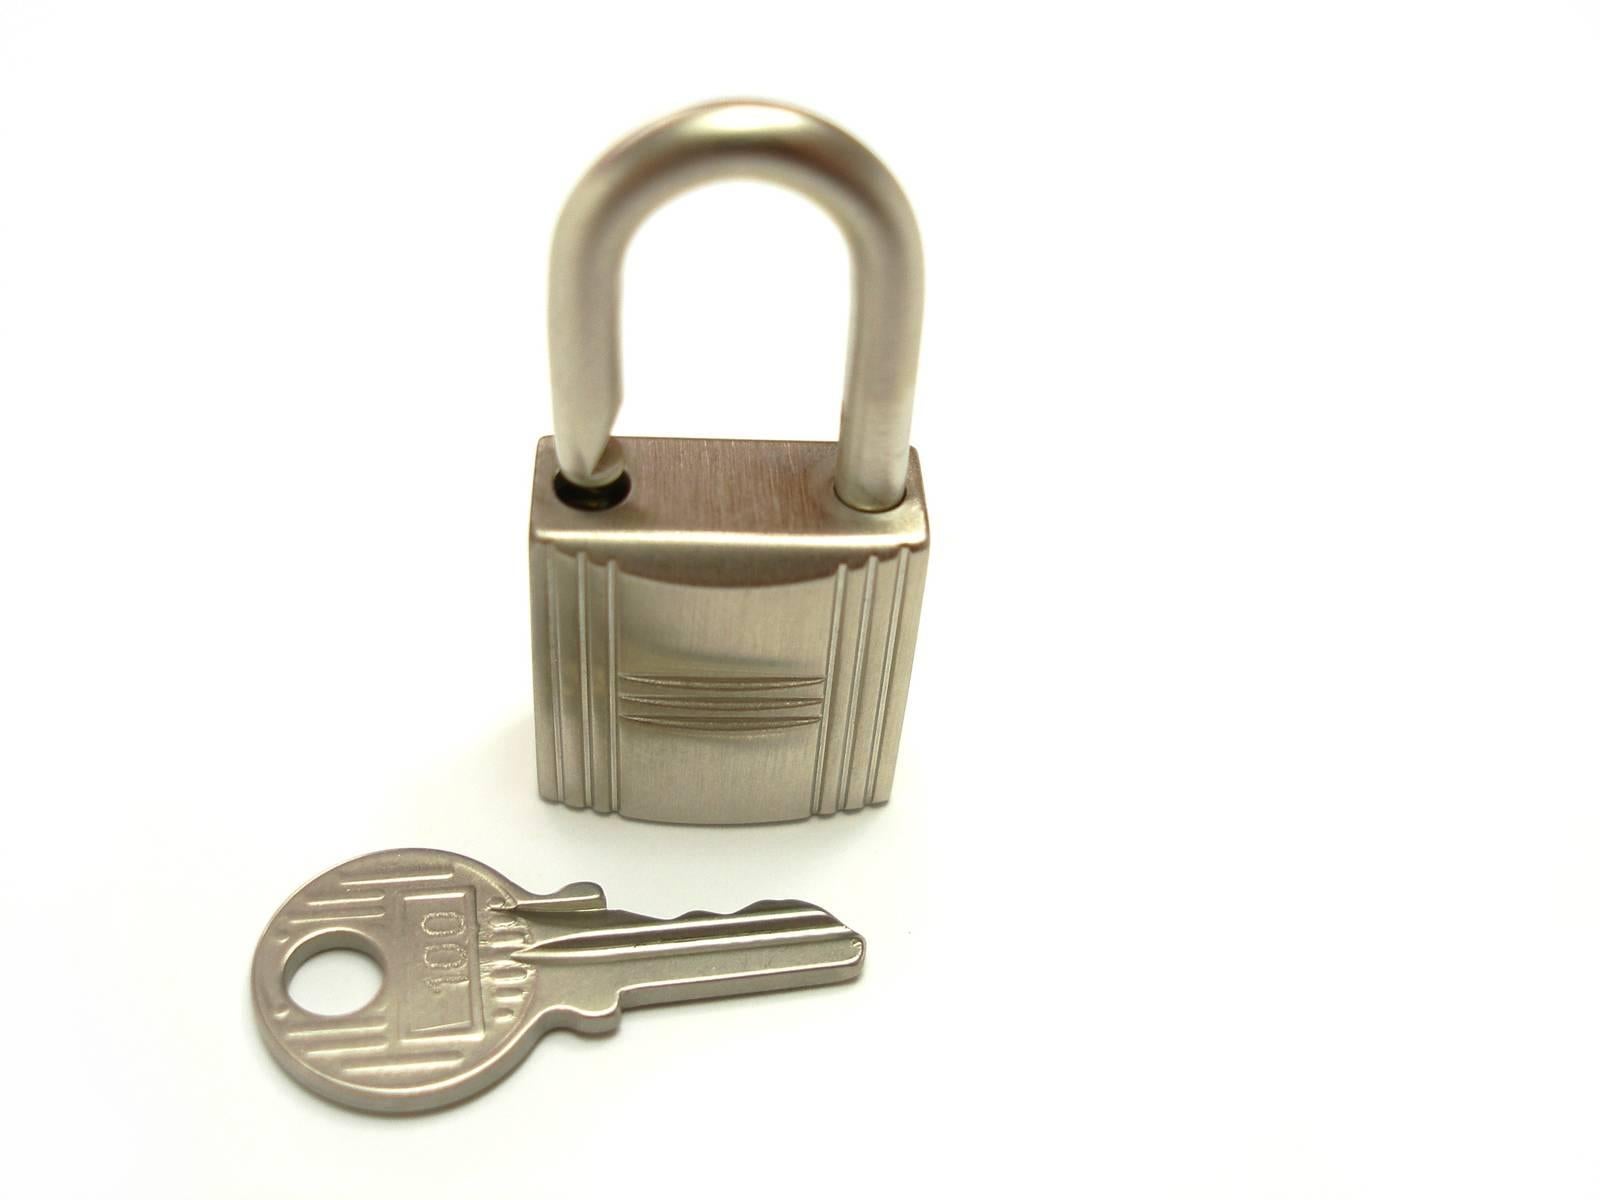 Hermès Cadenas Lock & 2 Keys For Birkin or Kelly bag Brush Finish/ BRAND NEW 8